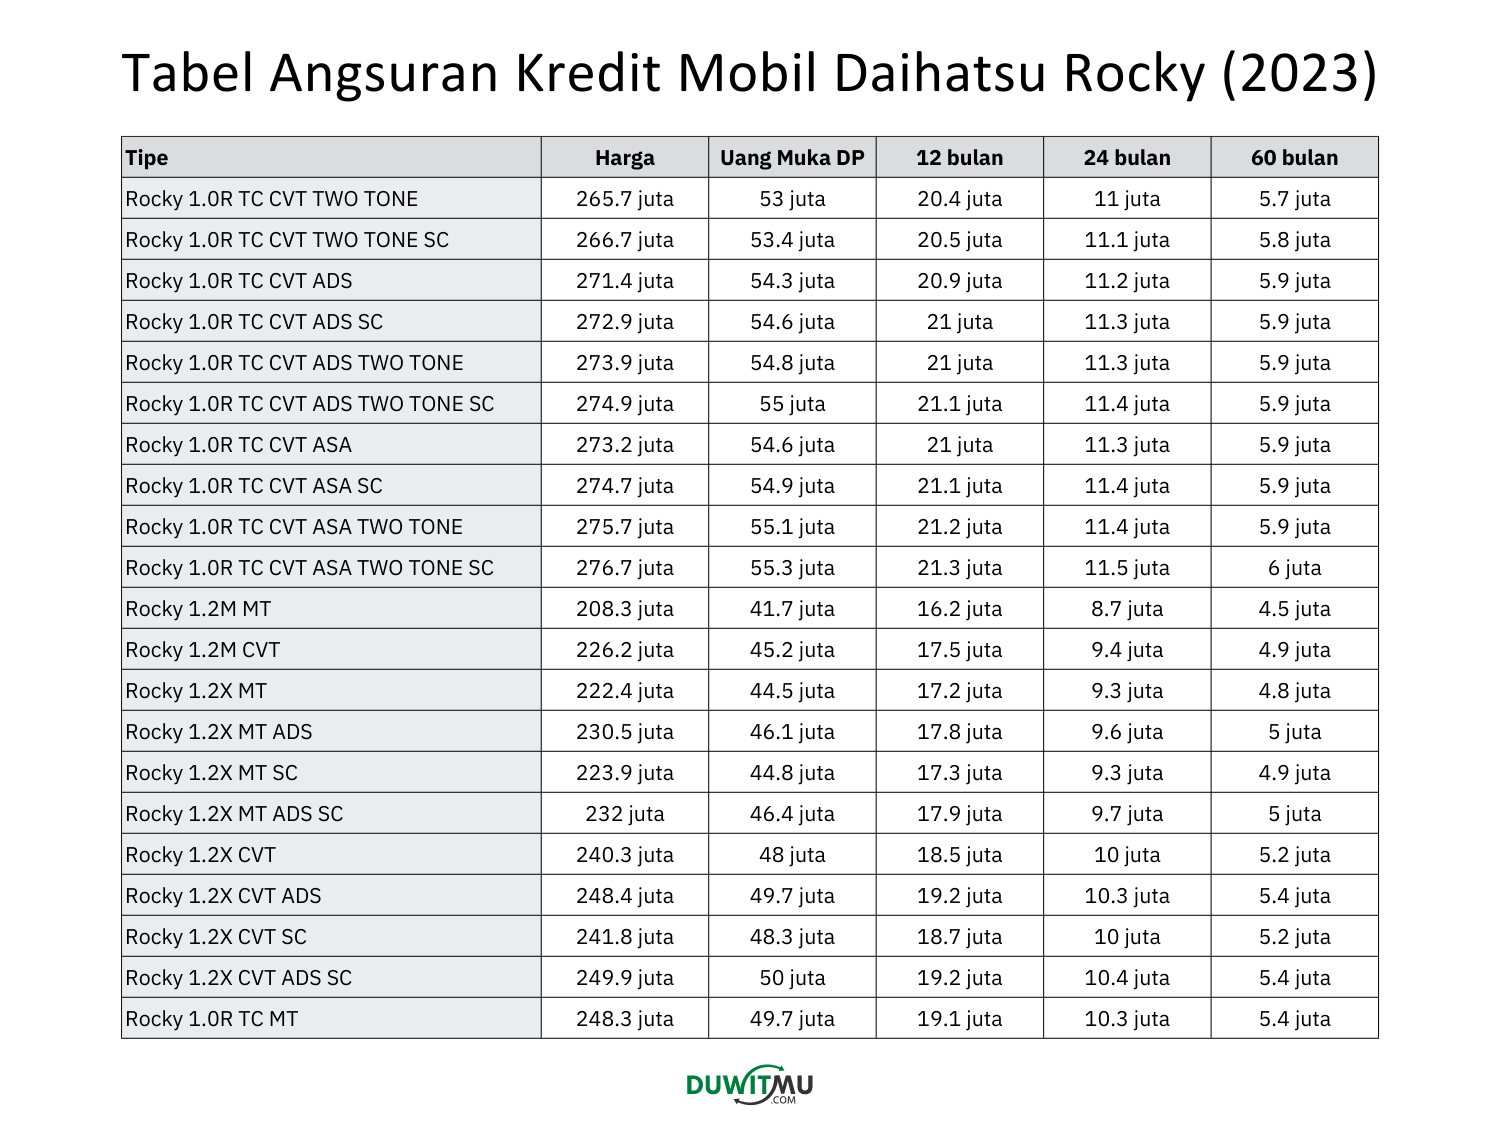 Tabel Angsuran Daihatsu Rocky